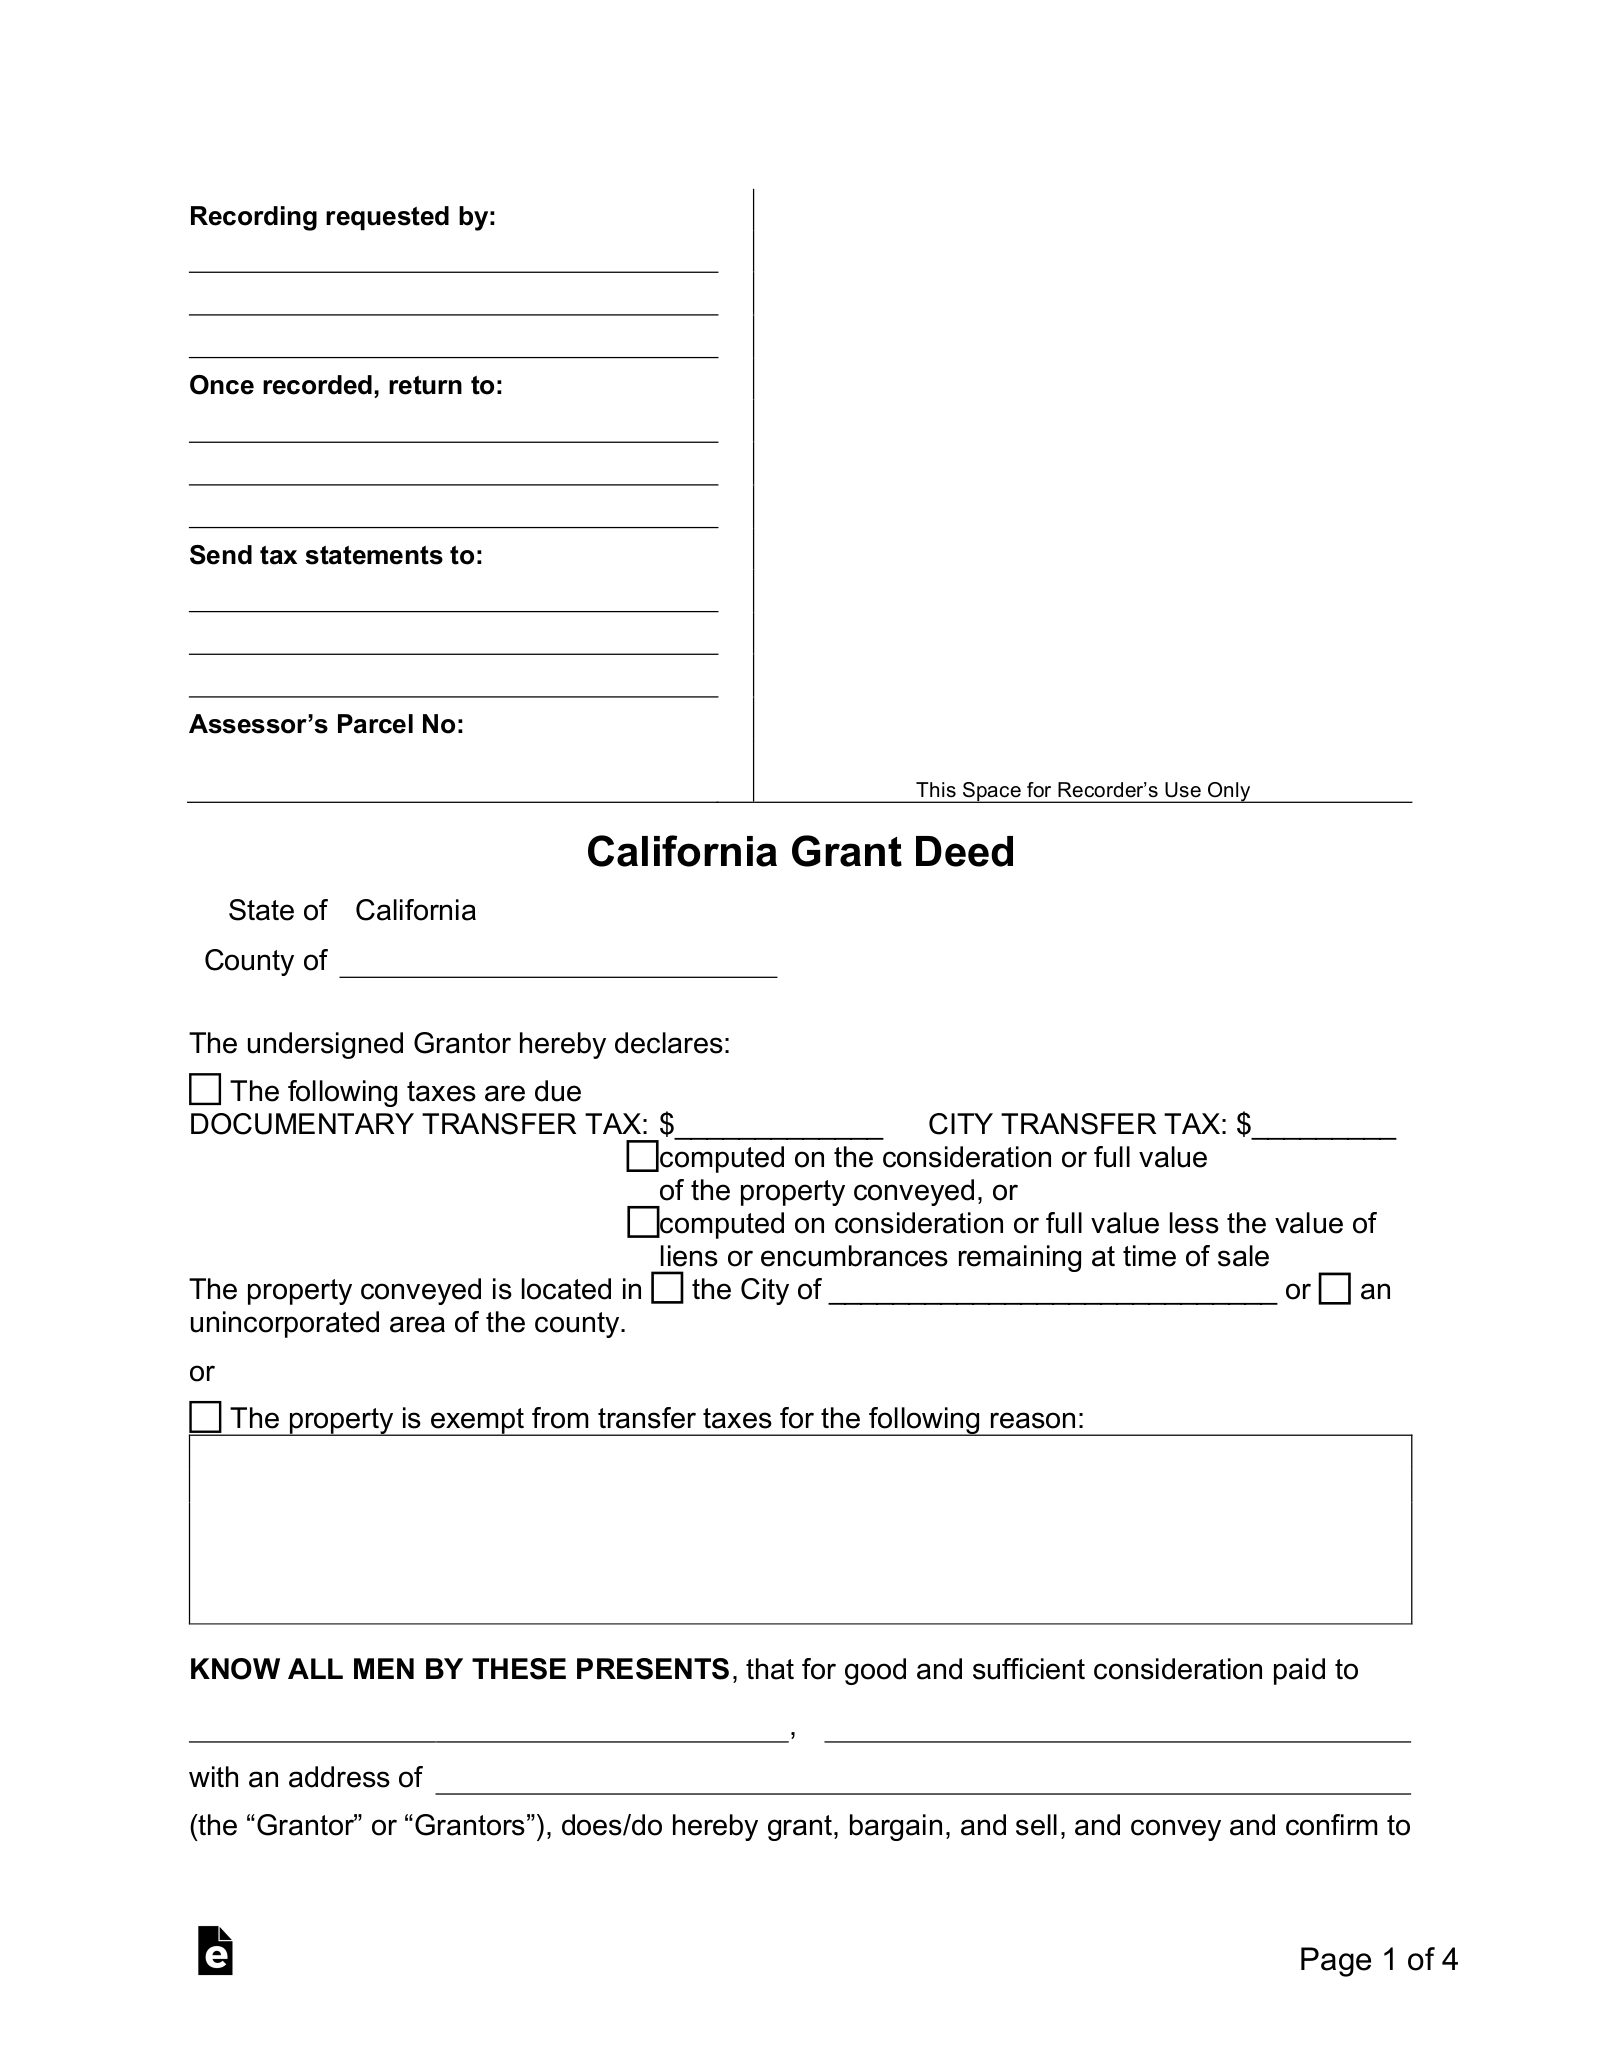 California Grant (Warranty) Deed Form